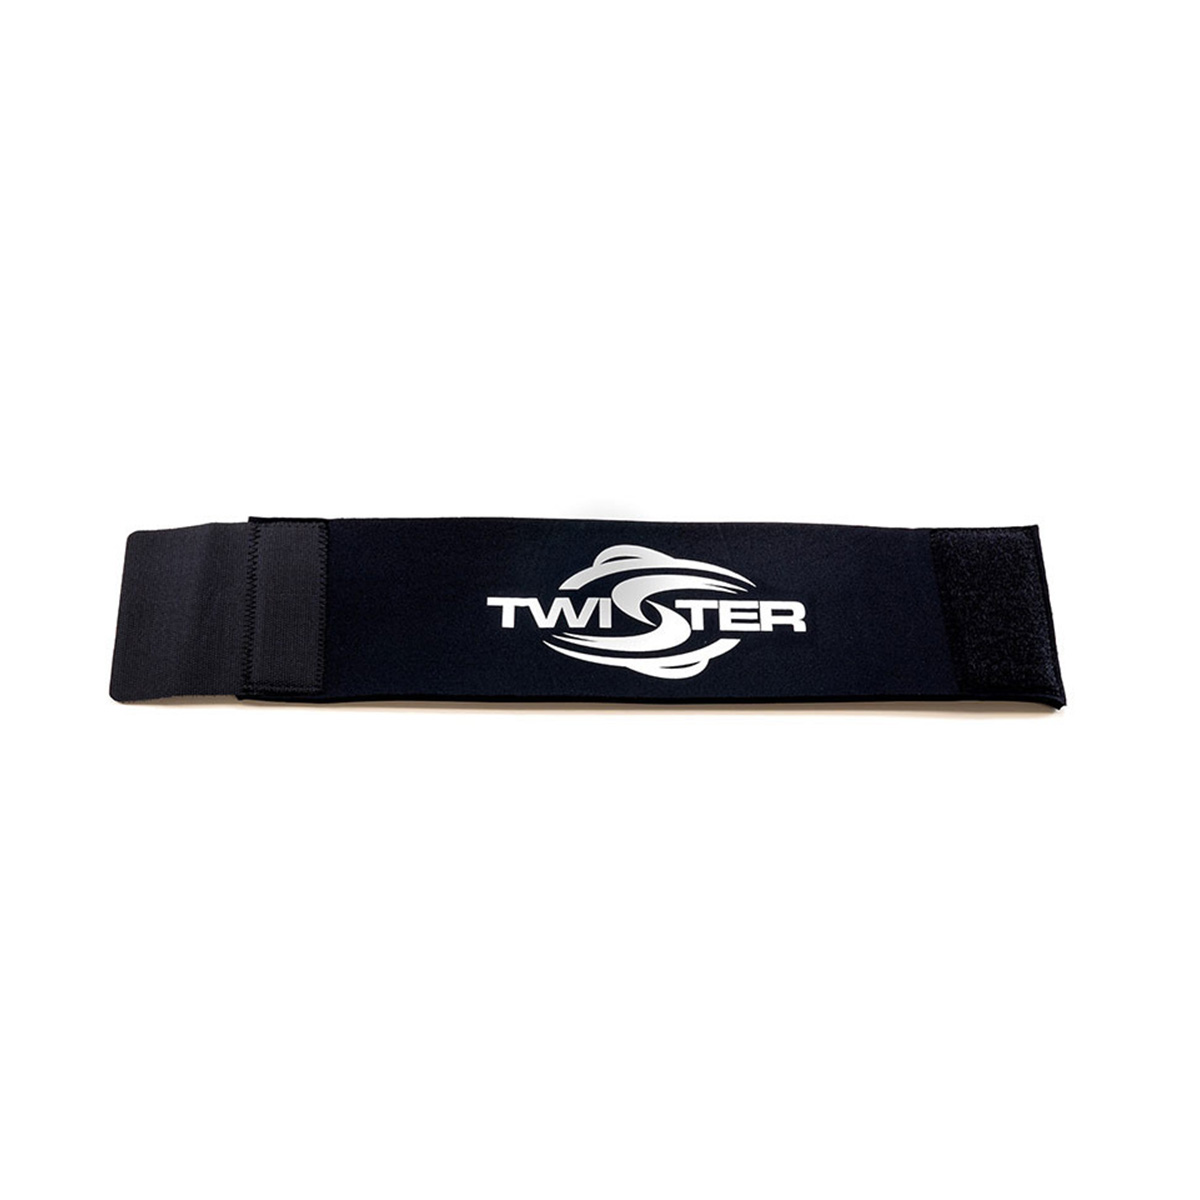 Twister T4 Leaf Collector Neoprene Cuff